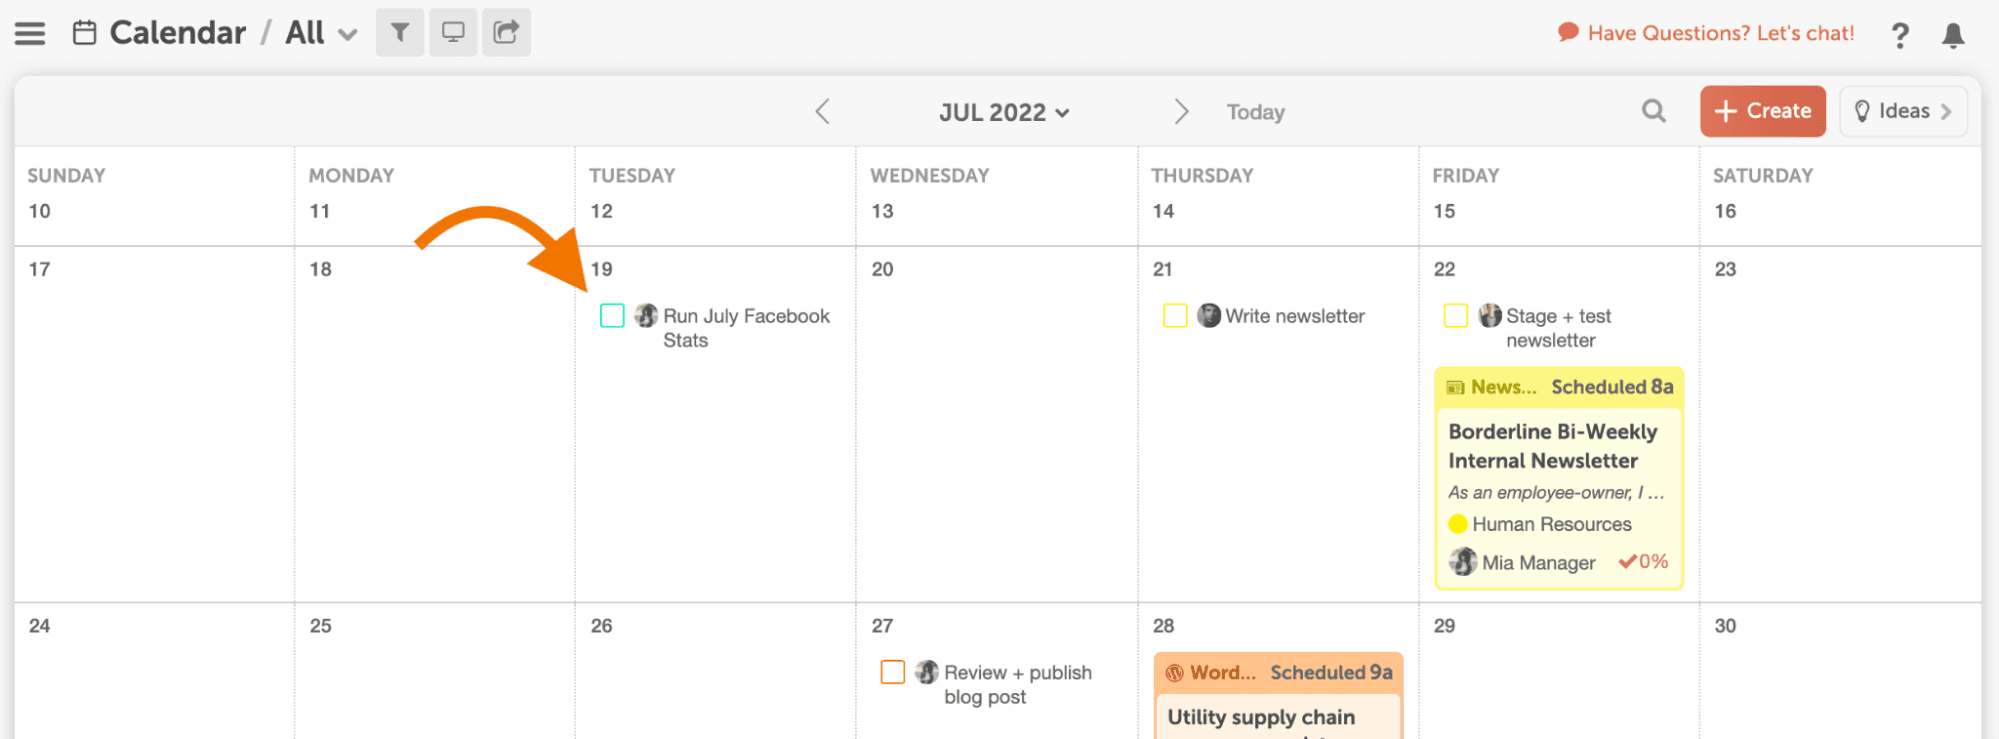 task in the marketing calendar calendar view